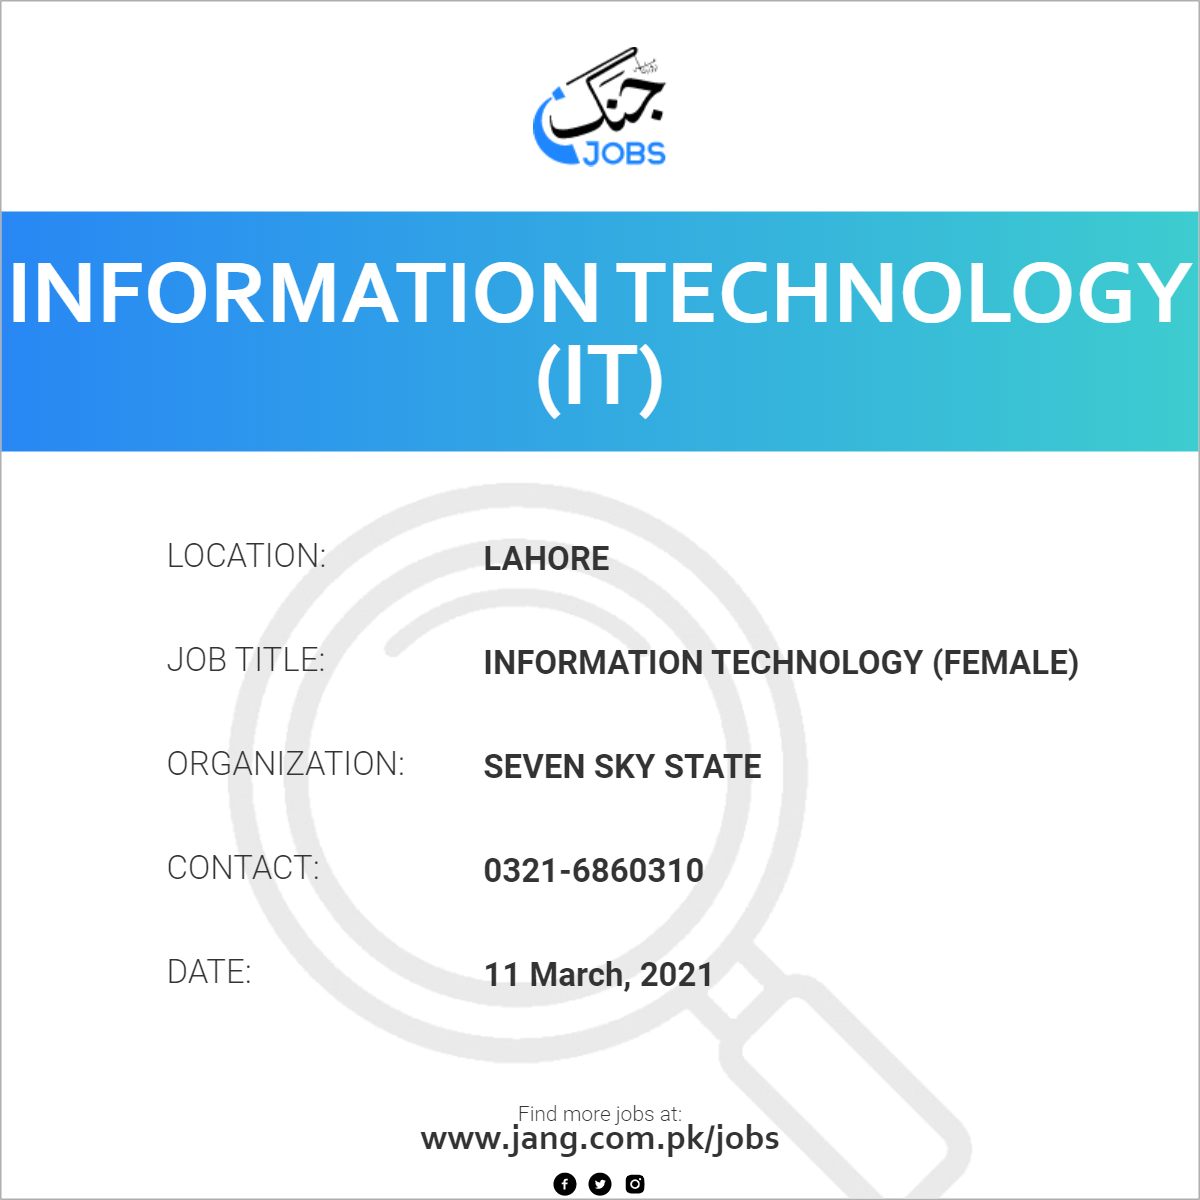 Information Technology (Female)